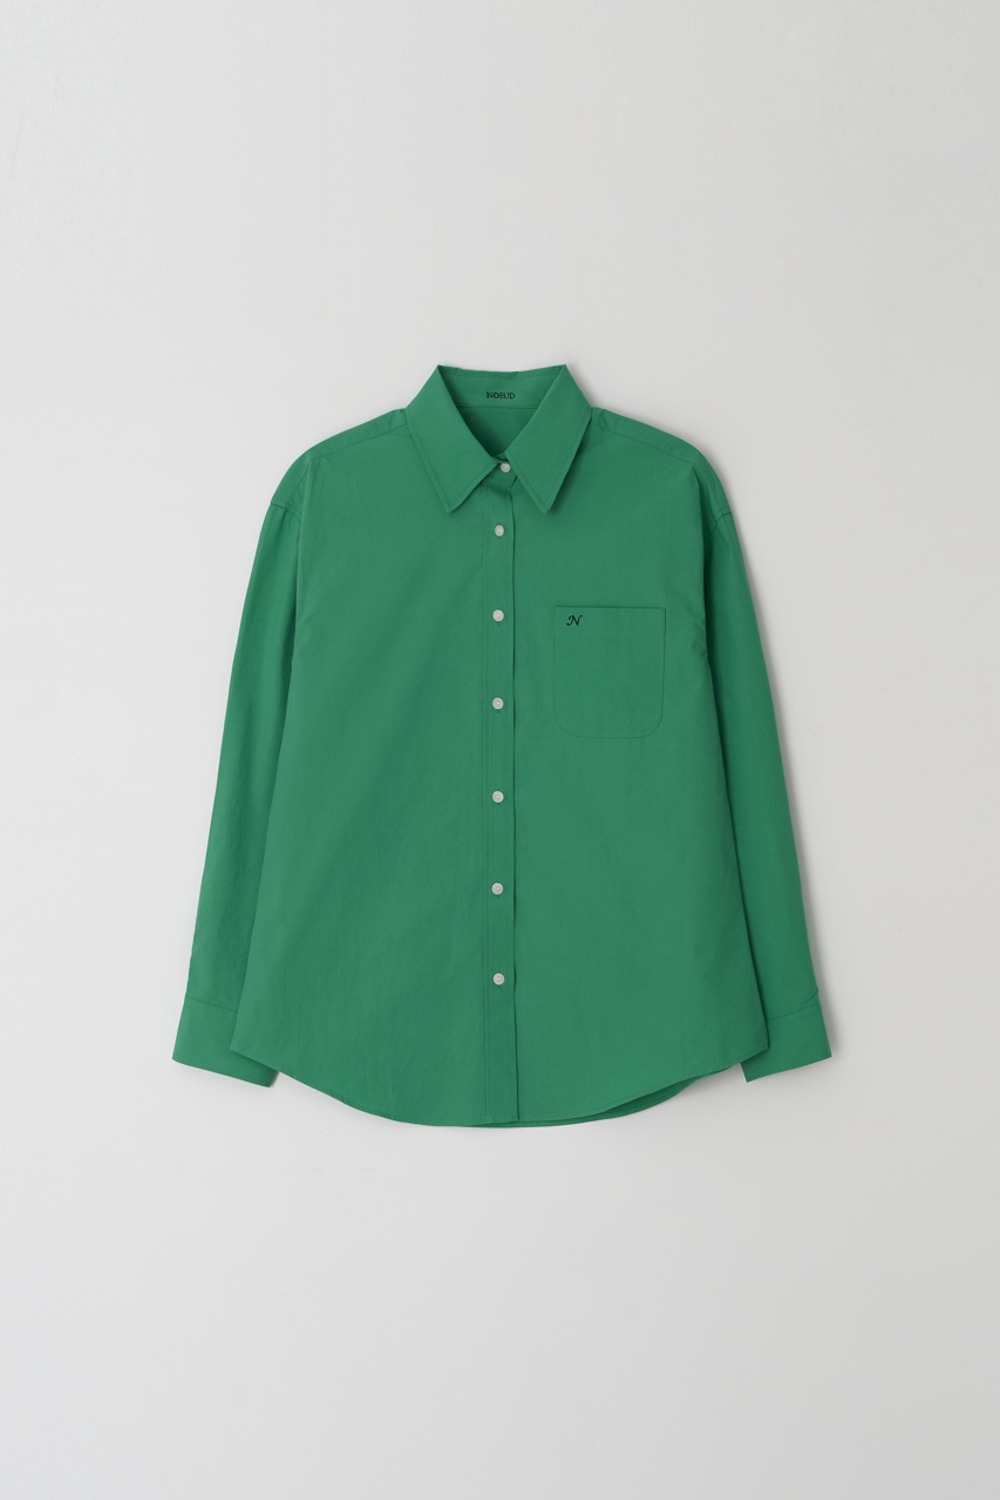 Needle cotton shirt (Green)